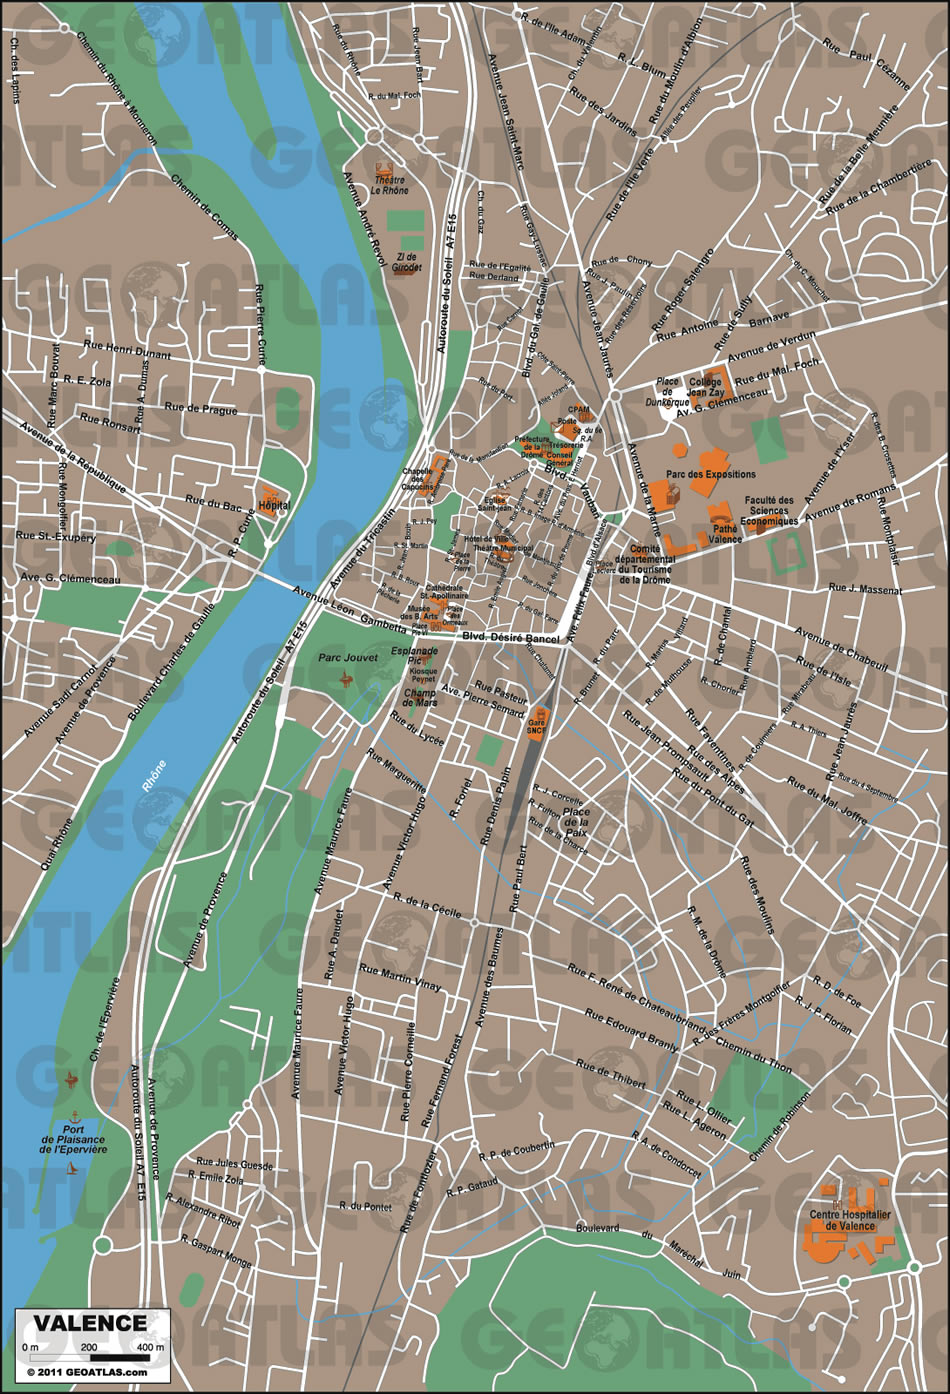 Valence tourist map